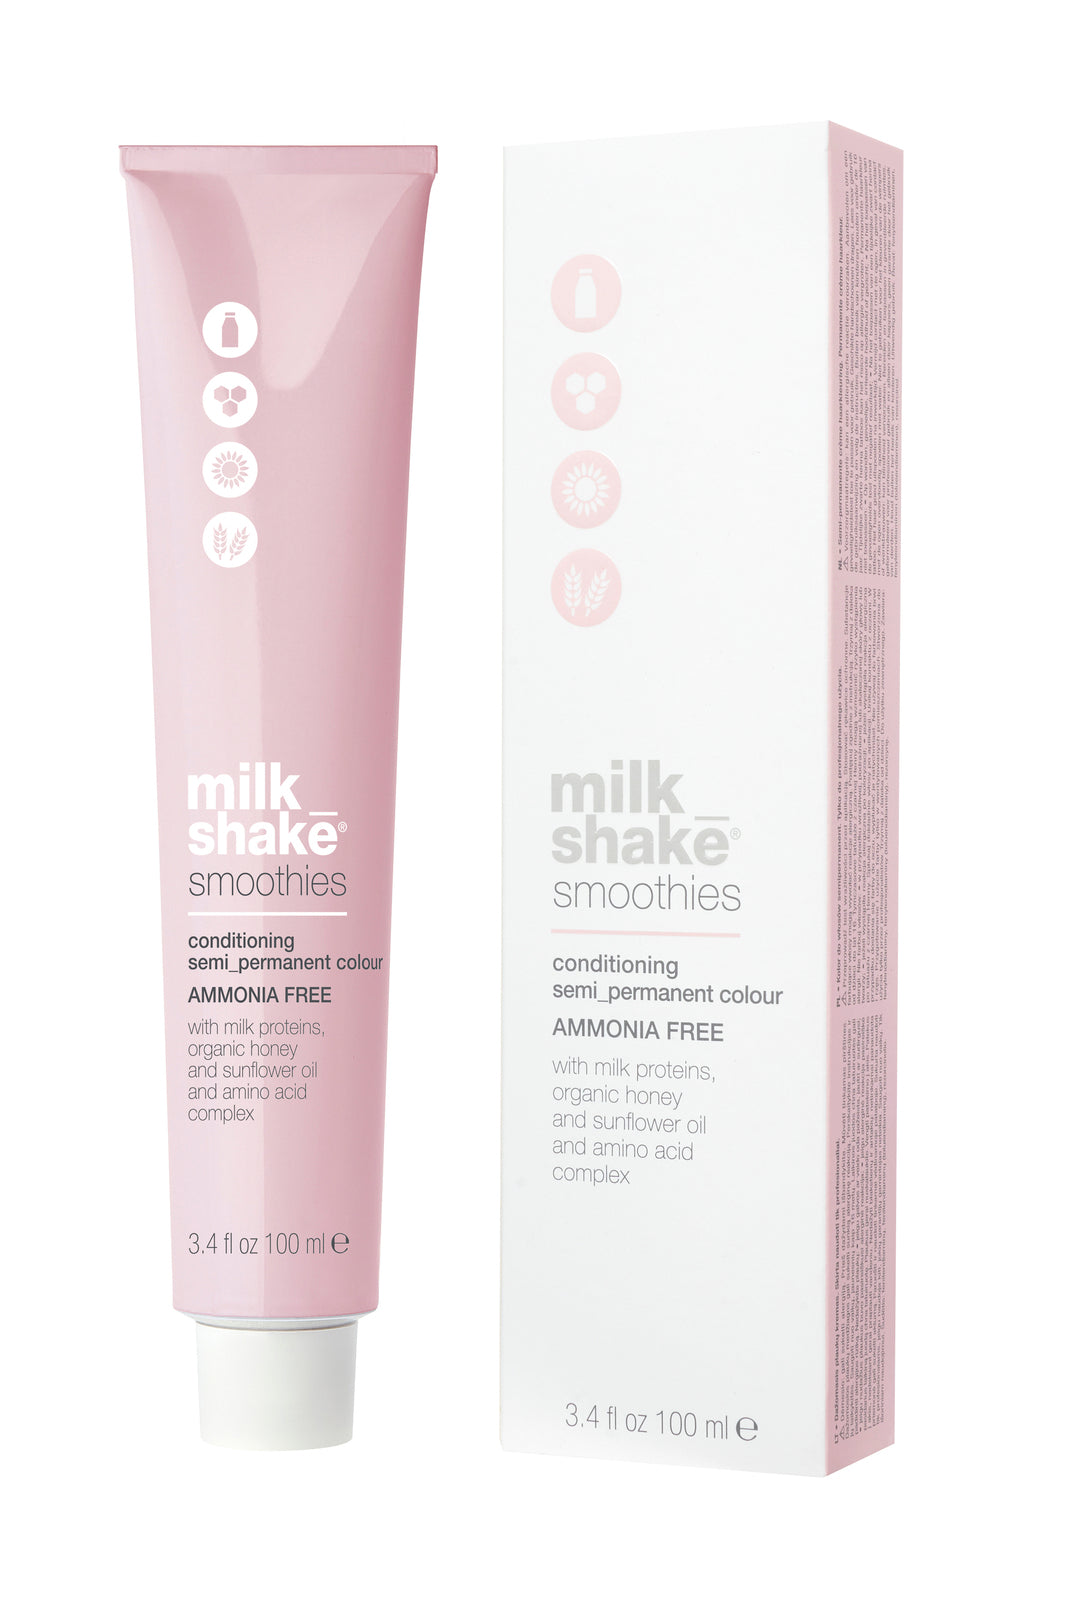 Milkshake smoothies semi-permanent color 5.77